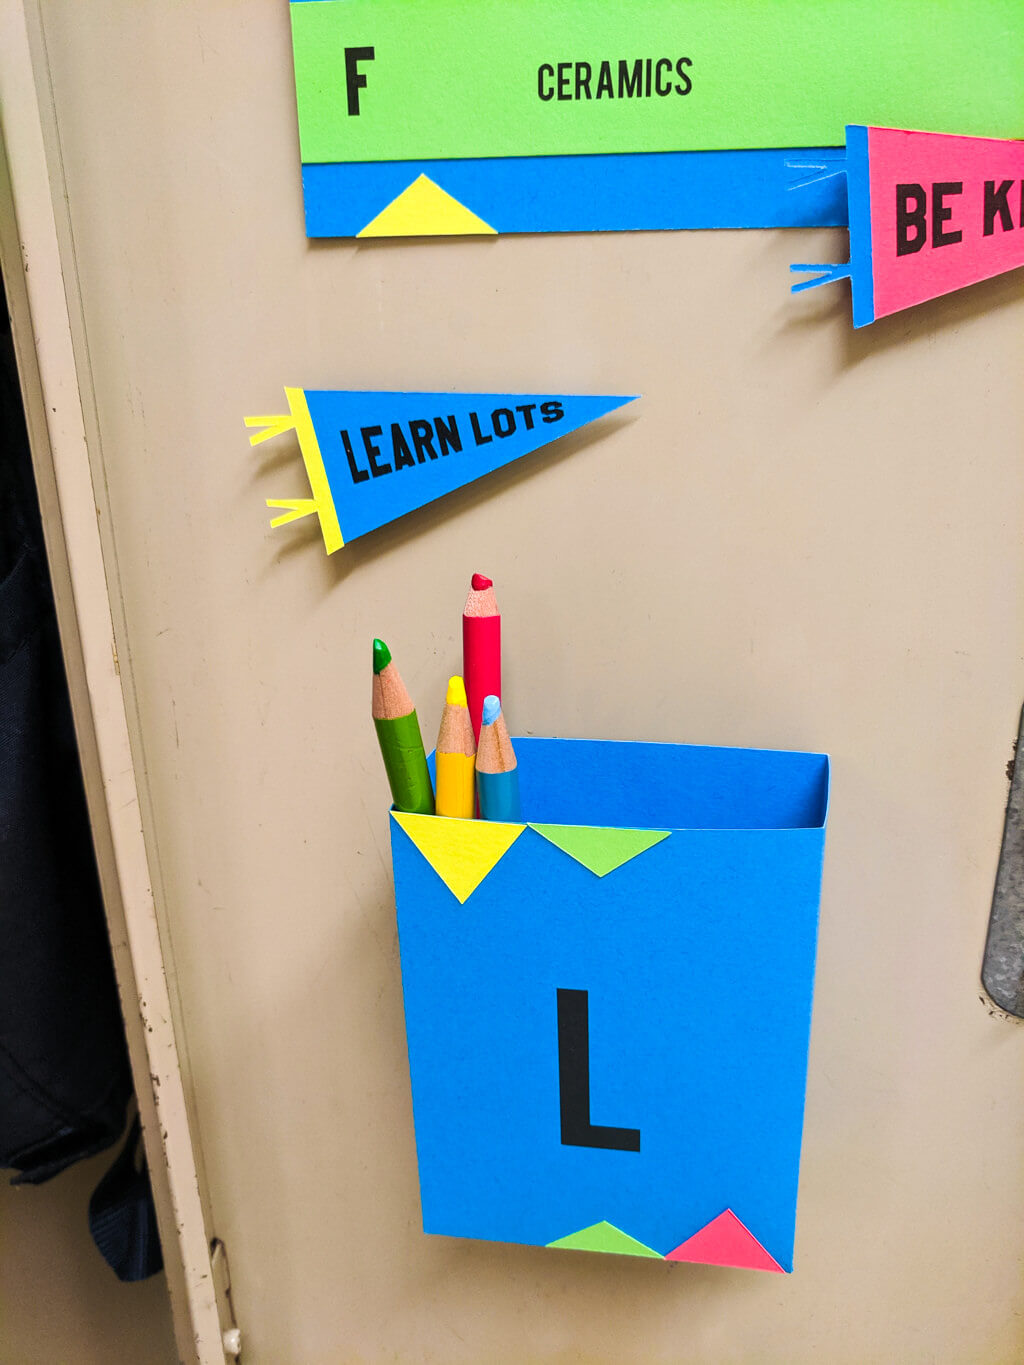 DIY locker decorations made using paper printable templates